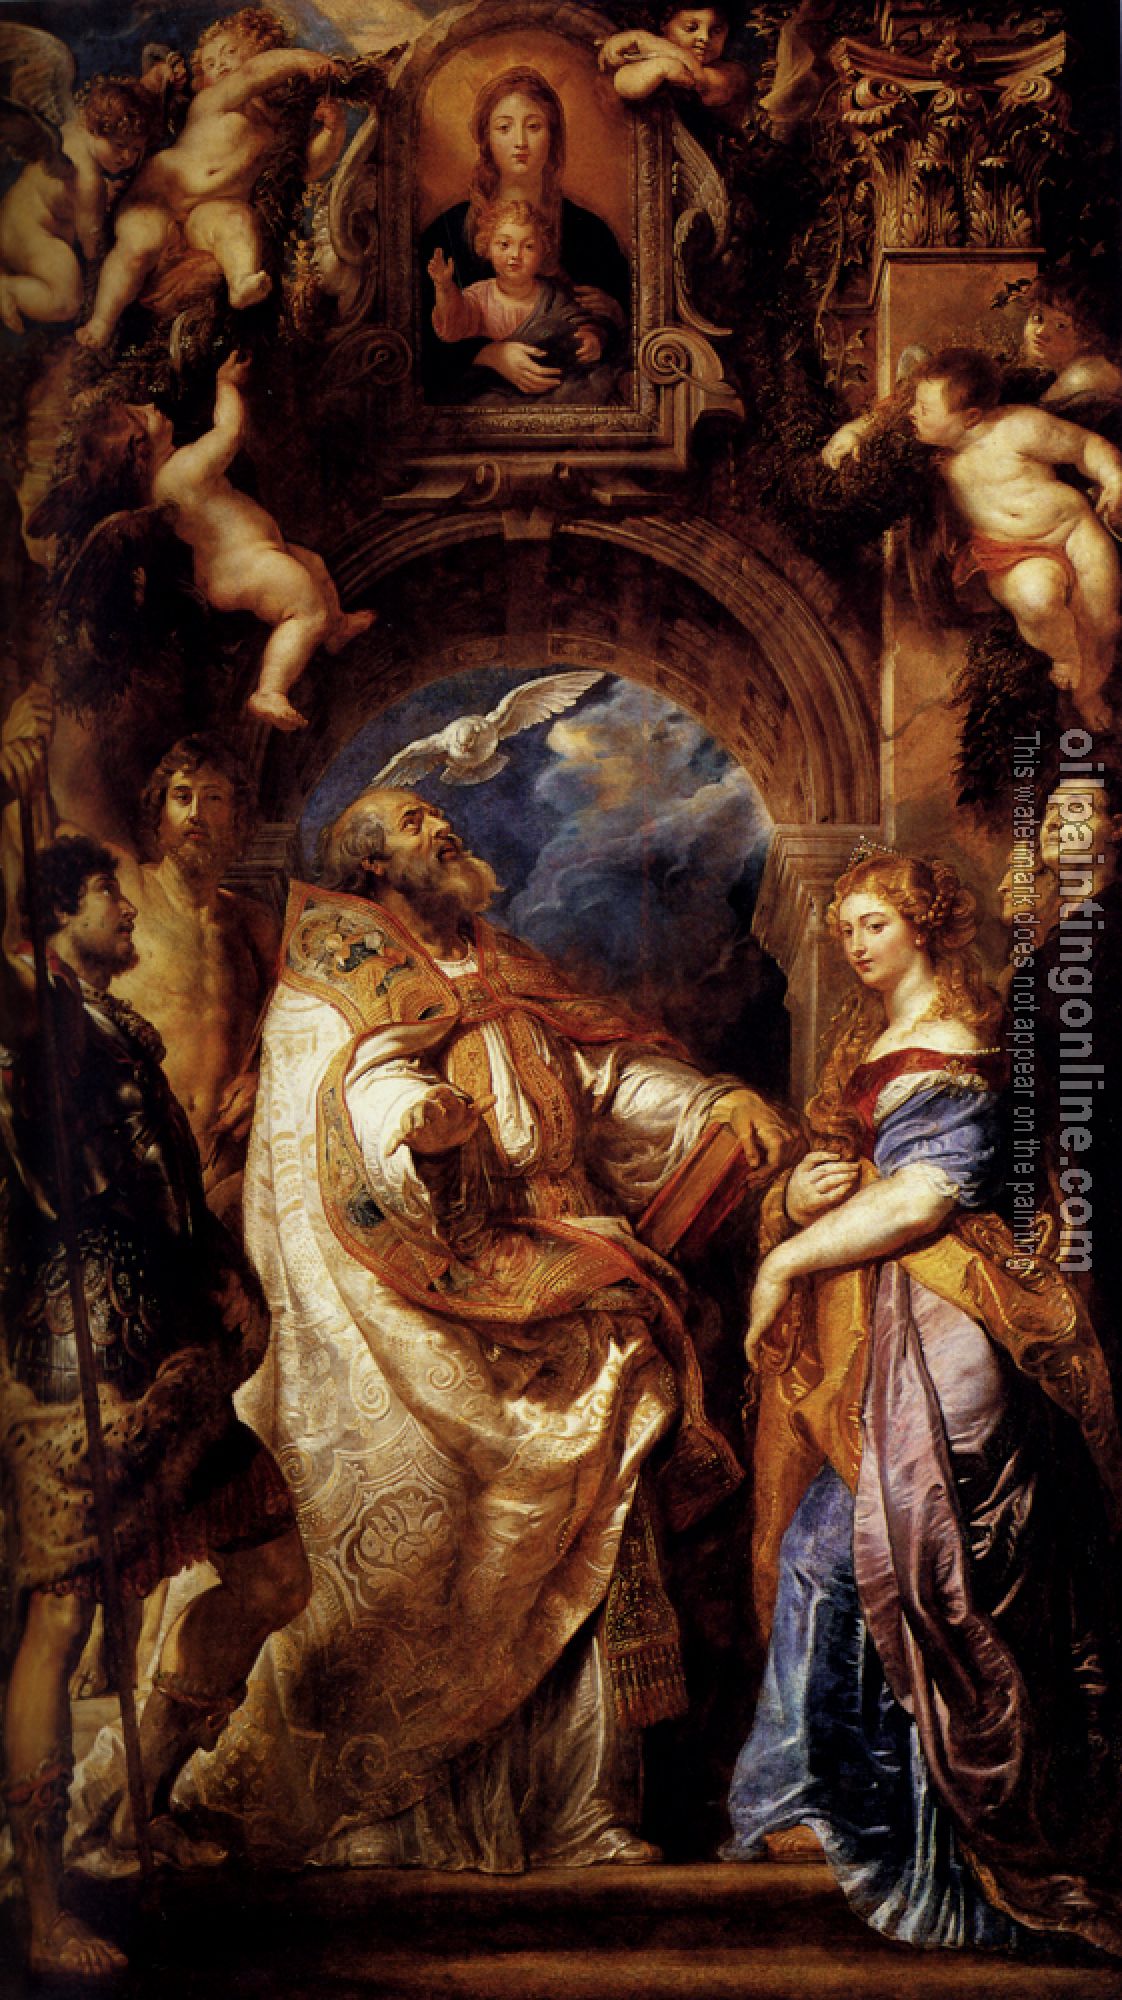 Rubens, Peter Paul - Saint Gregory With Saints Domitilla, Maurus, And Papianus